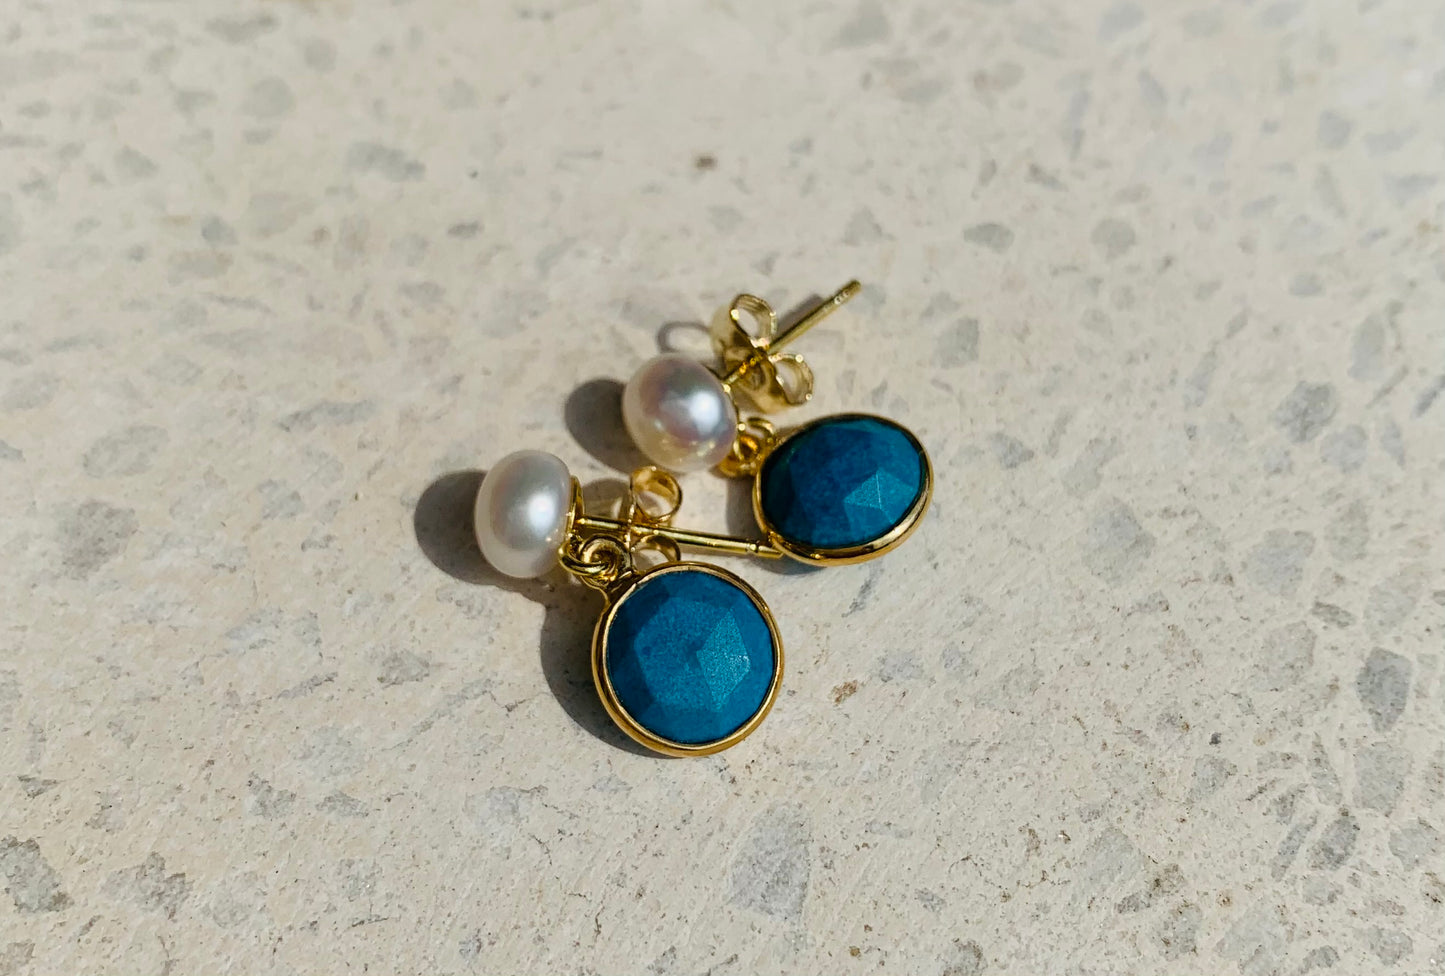 Nova turquoise & cultured freshwater pearl drop earrings